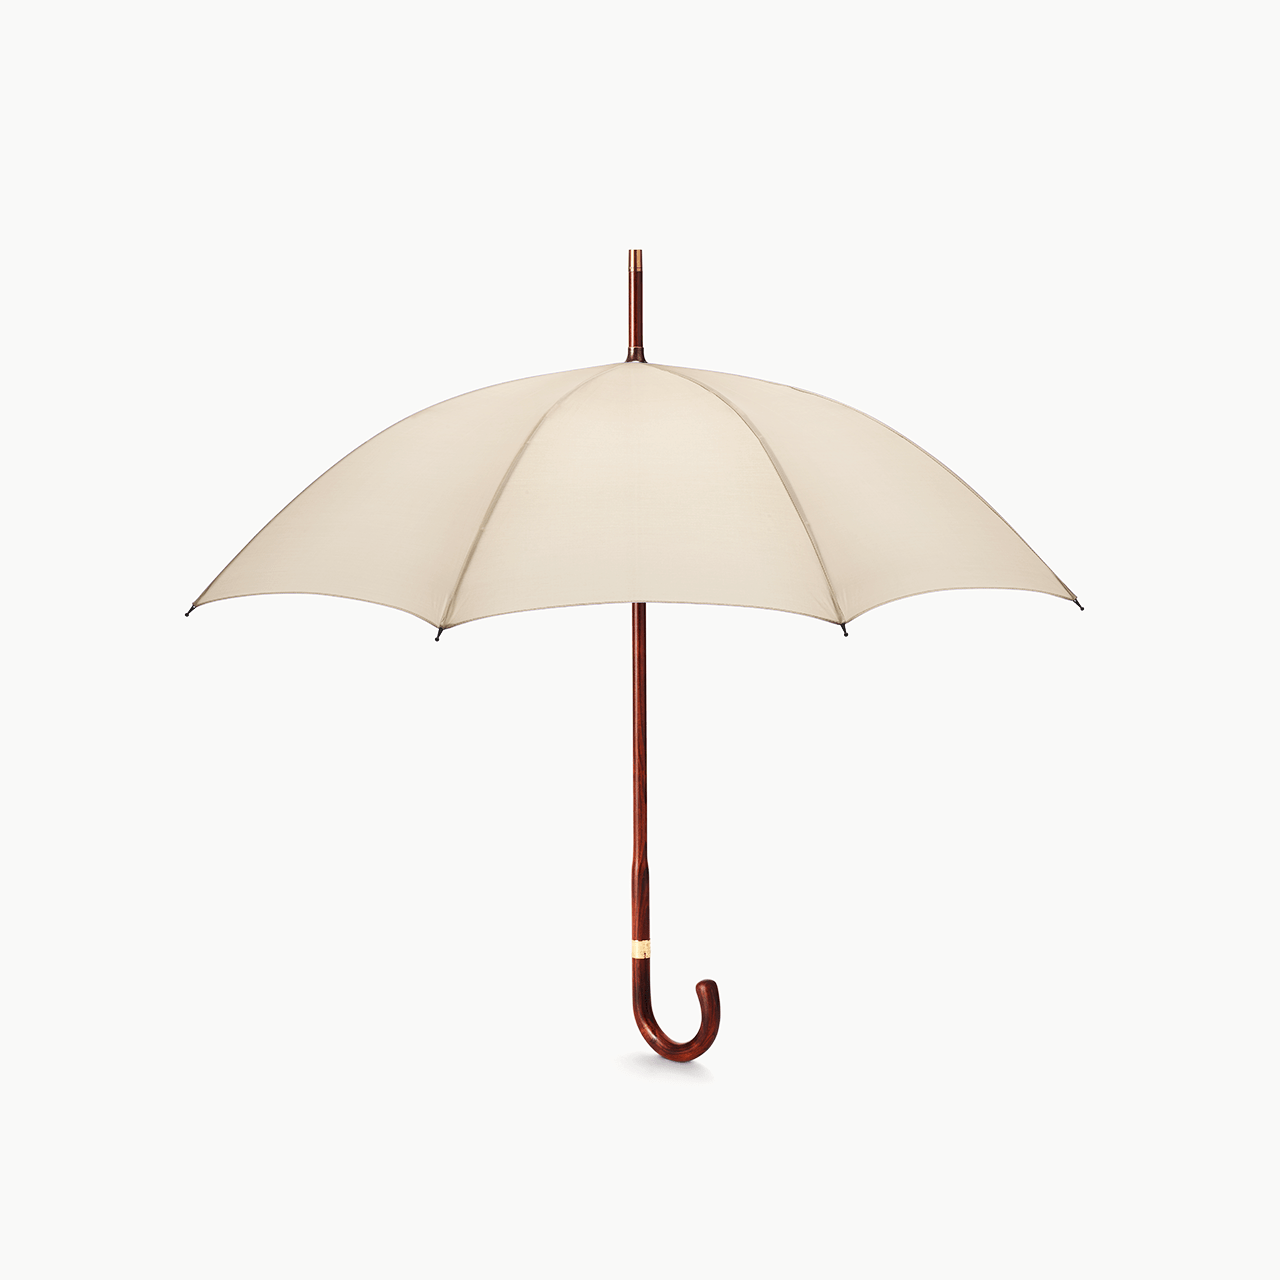 Stripped Cherry Umbrella for Women - Cream - Swaine